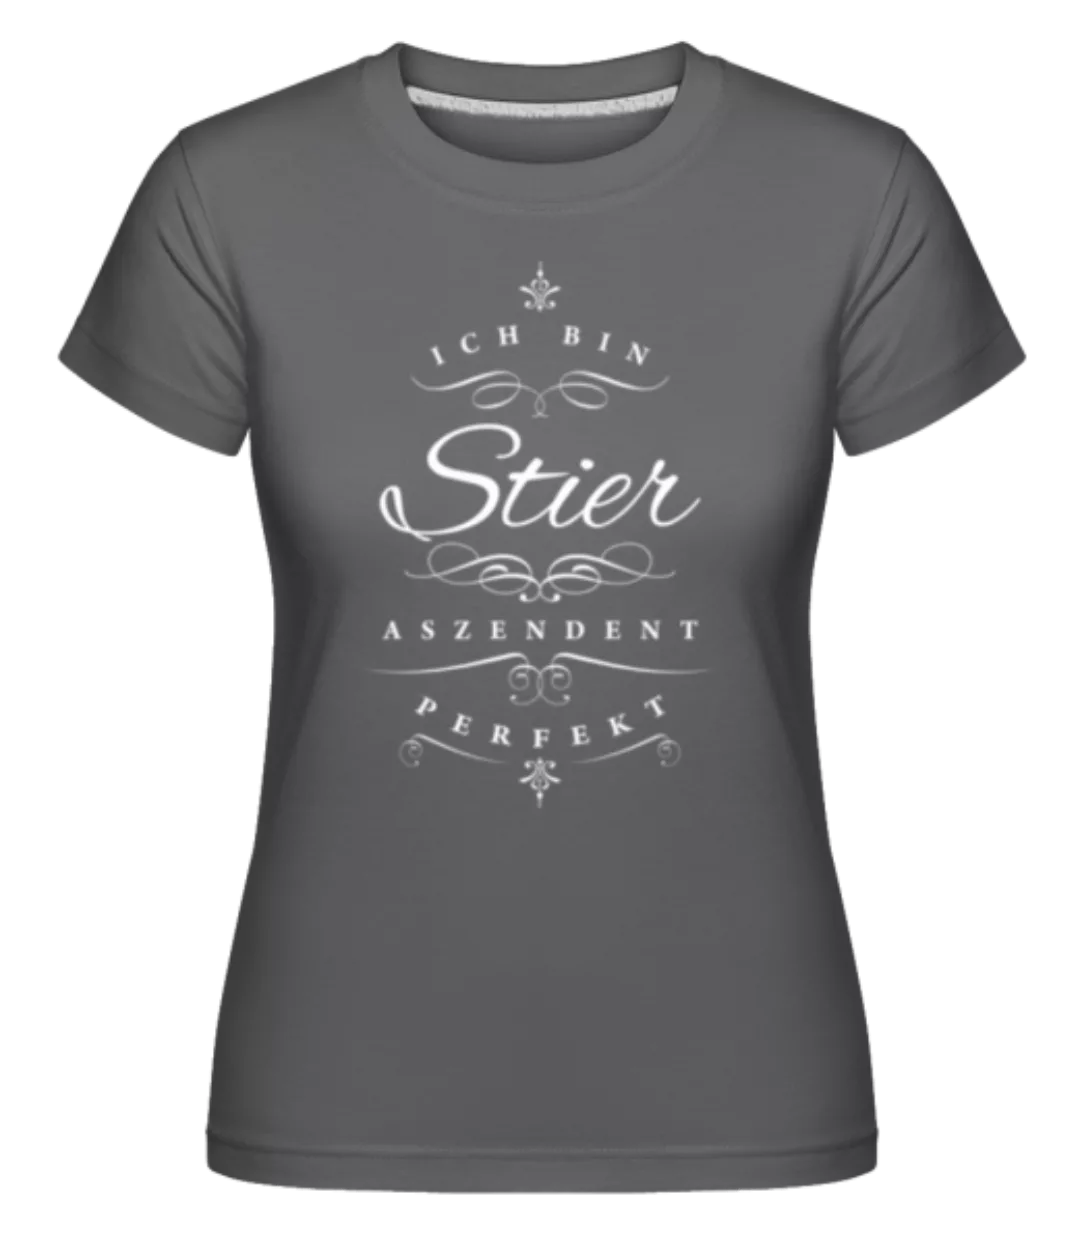 Ich Bin Stier Aszendent Perfekt · Shirtinator Frauen T-Shirt günstig online kaufen